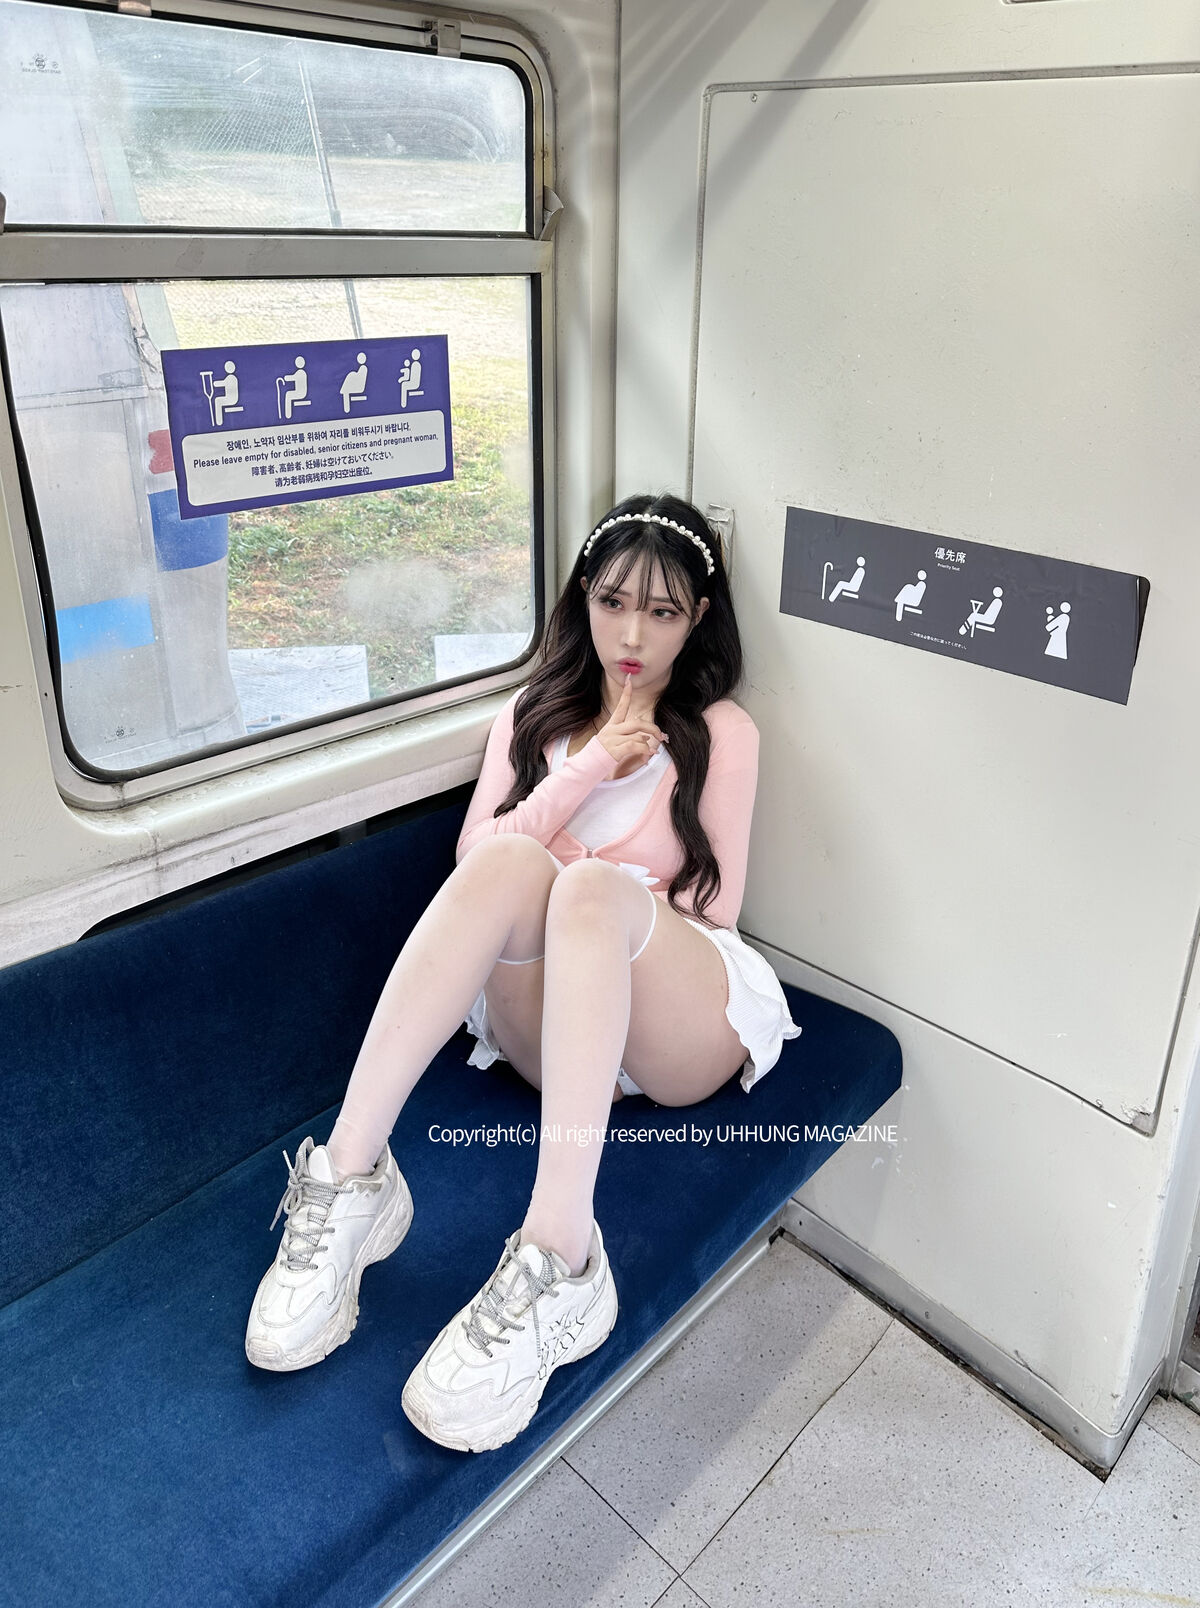 UHHUNG MAGAZINE Hani 하니 The Girlfriend On The Subway Part1 0017 5062646474.jpg